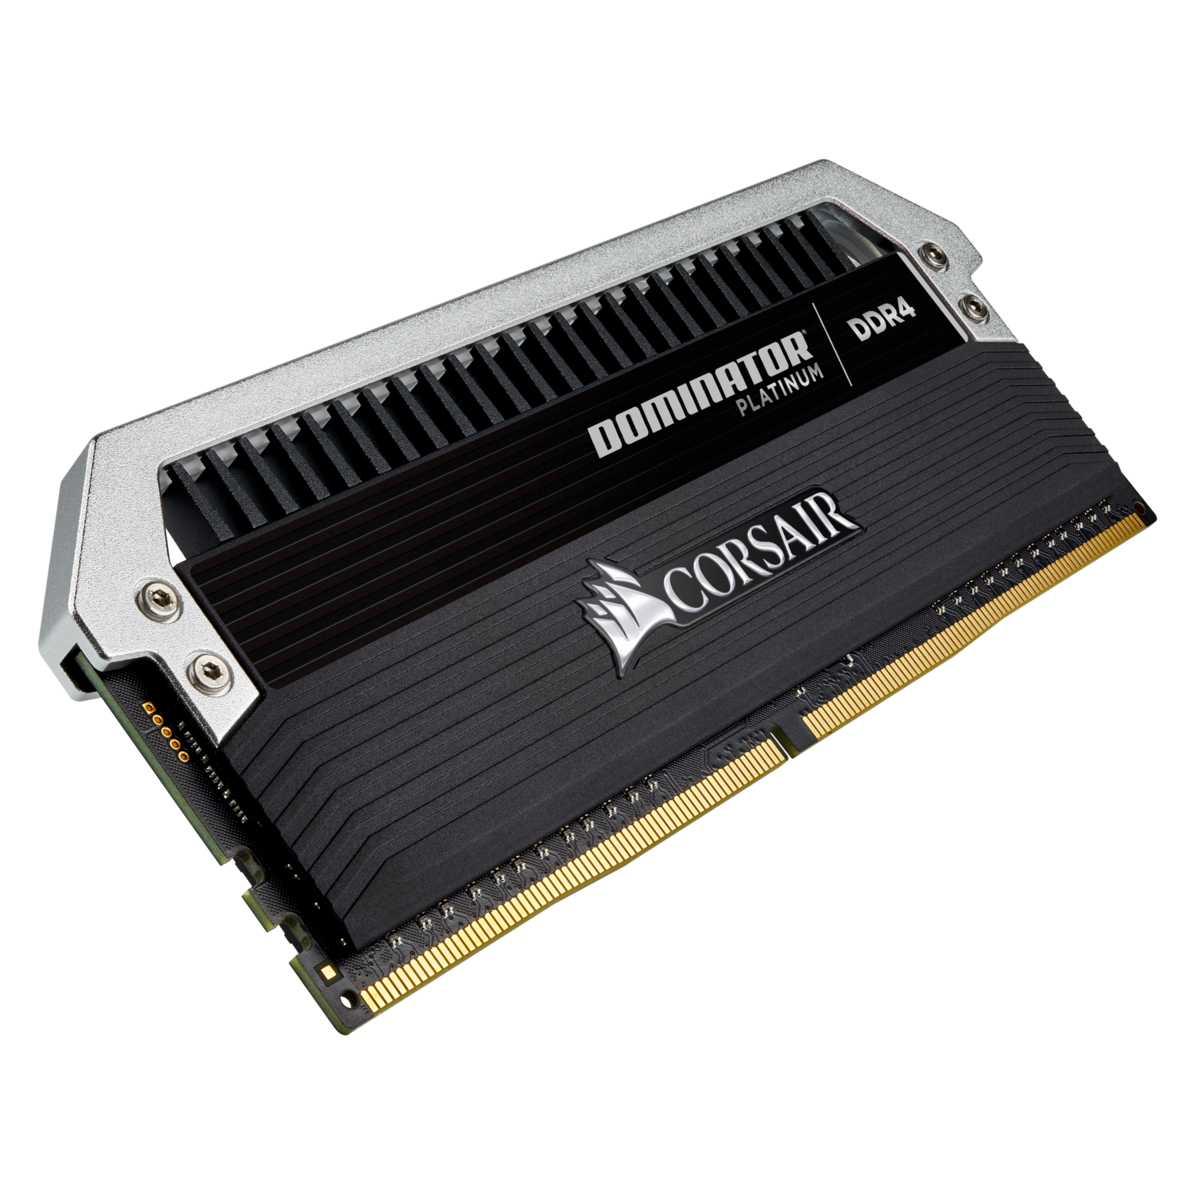 MEMORIA DDR4 CORSAIR DOMINATORPLATINUM 16GB 2X8 3200MHZ CMD16GX4M2B320